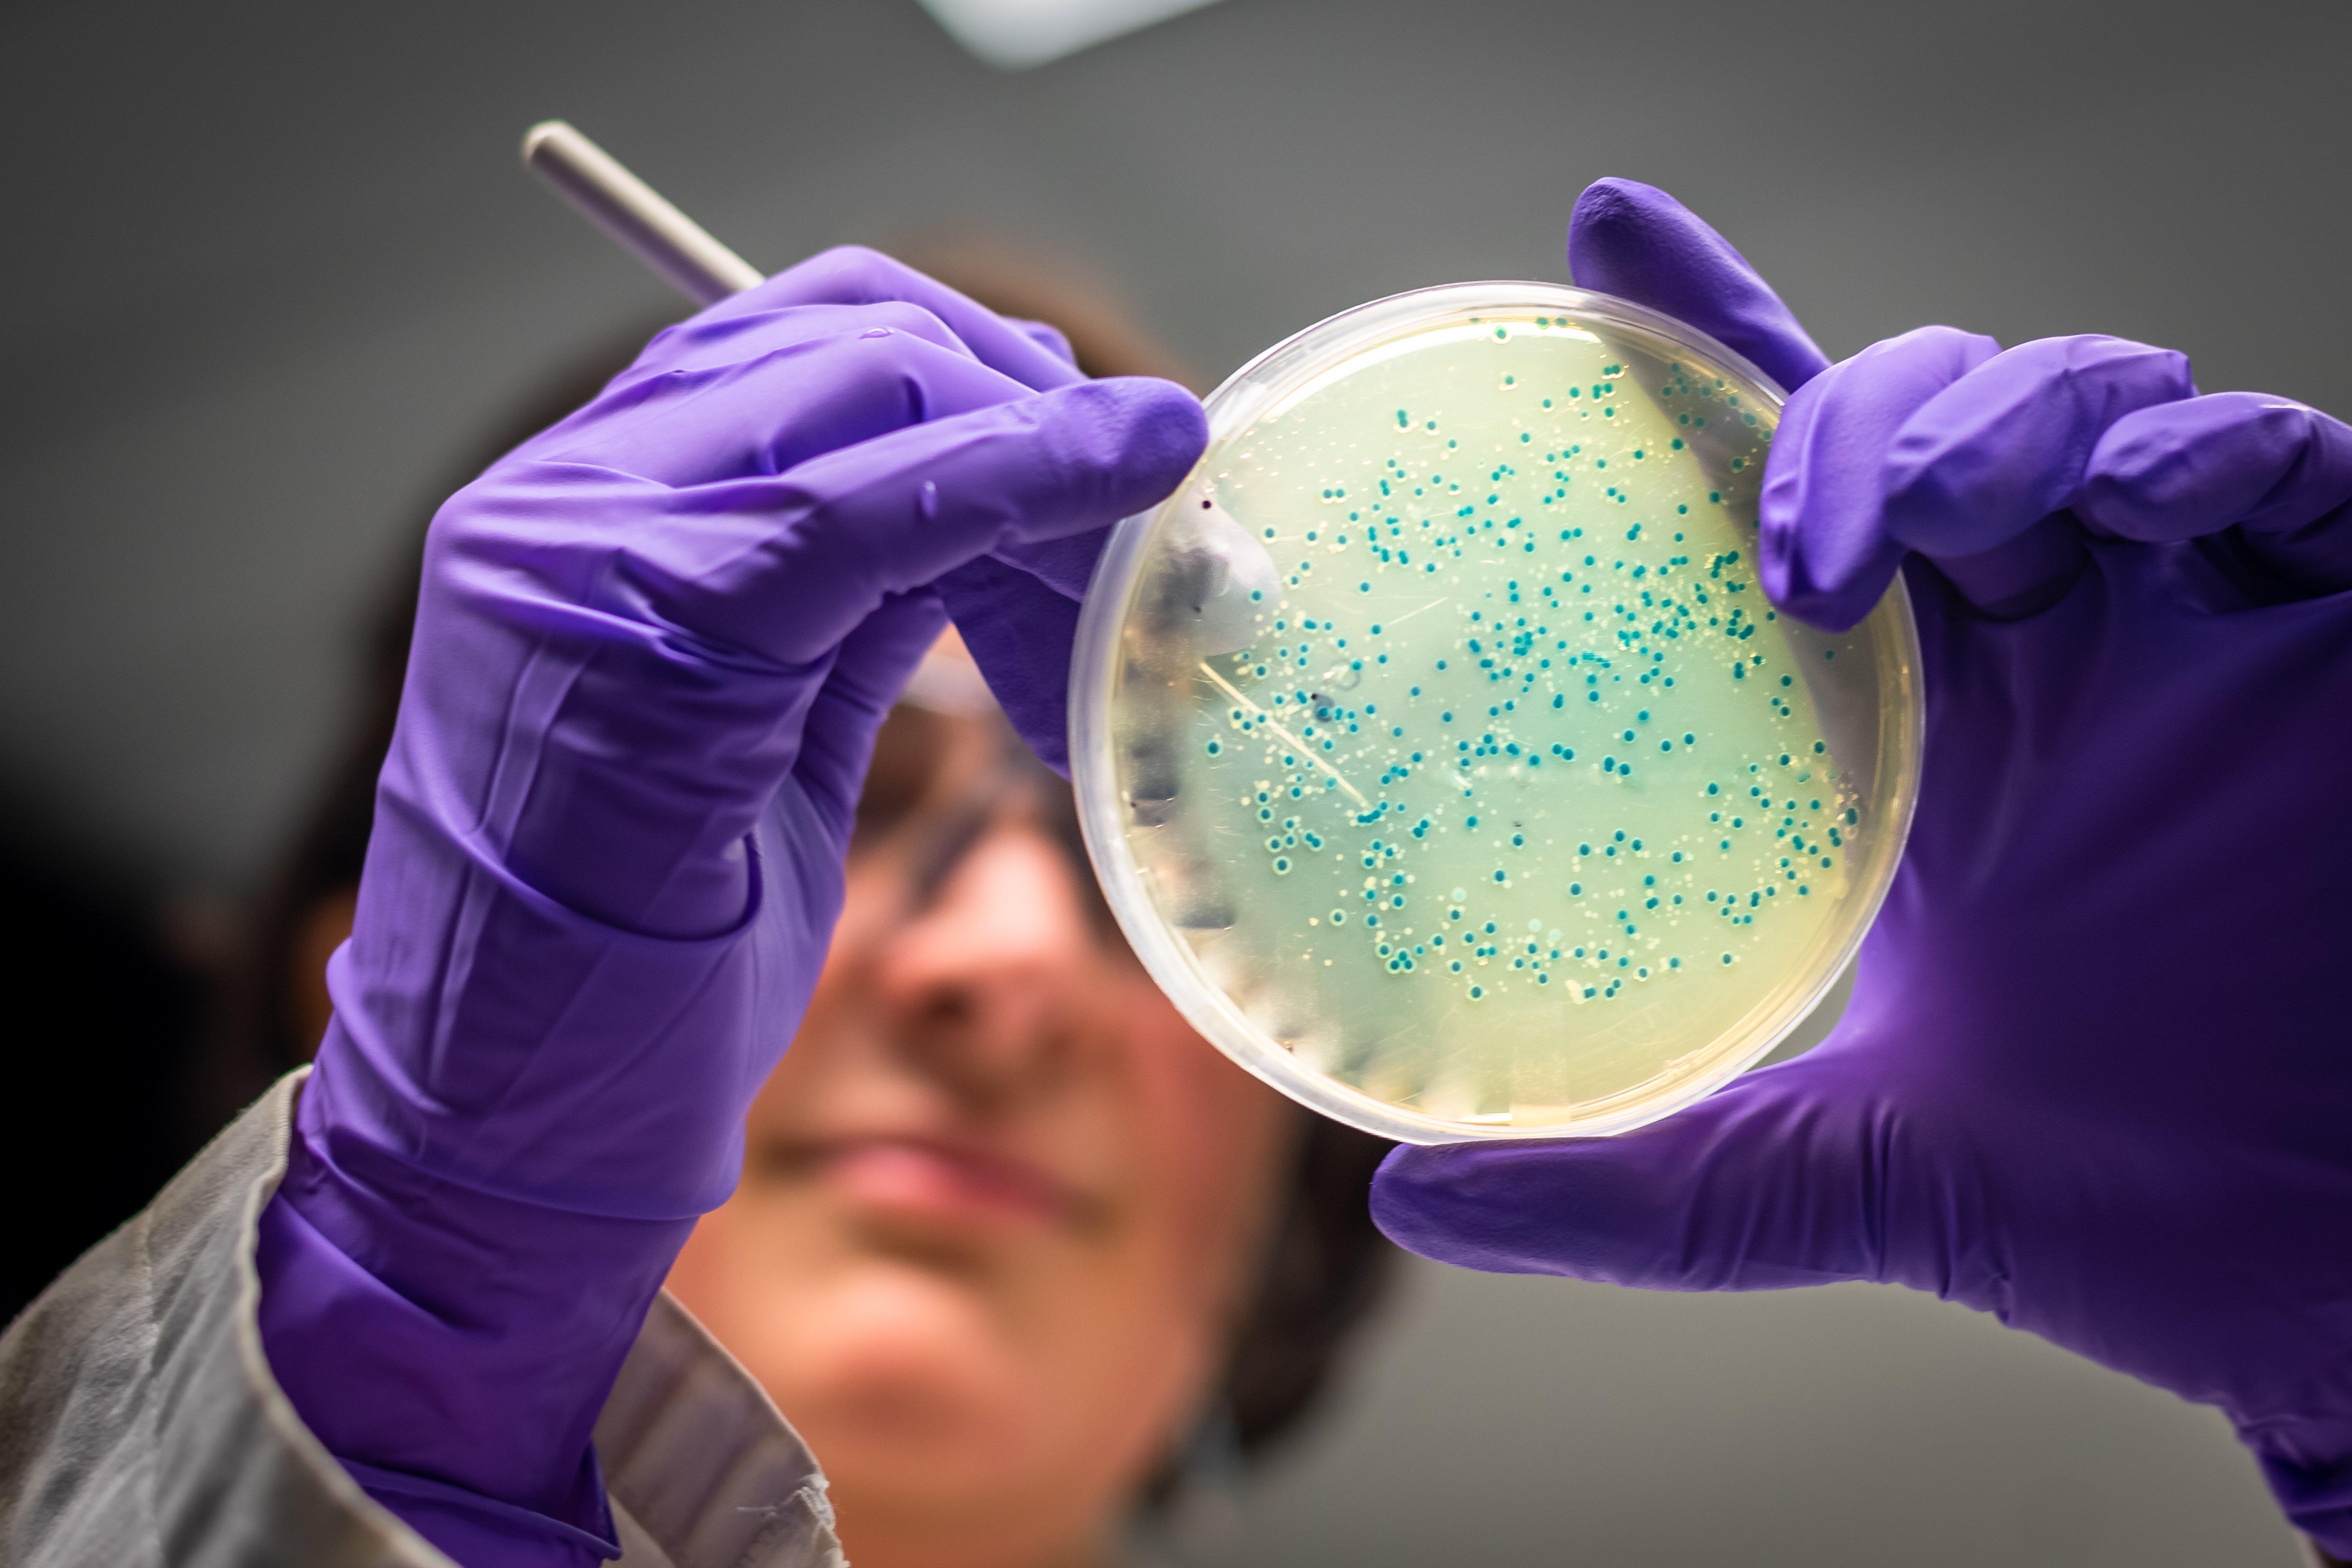 Is Legionella Testing a Legal Requirement?